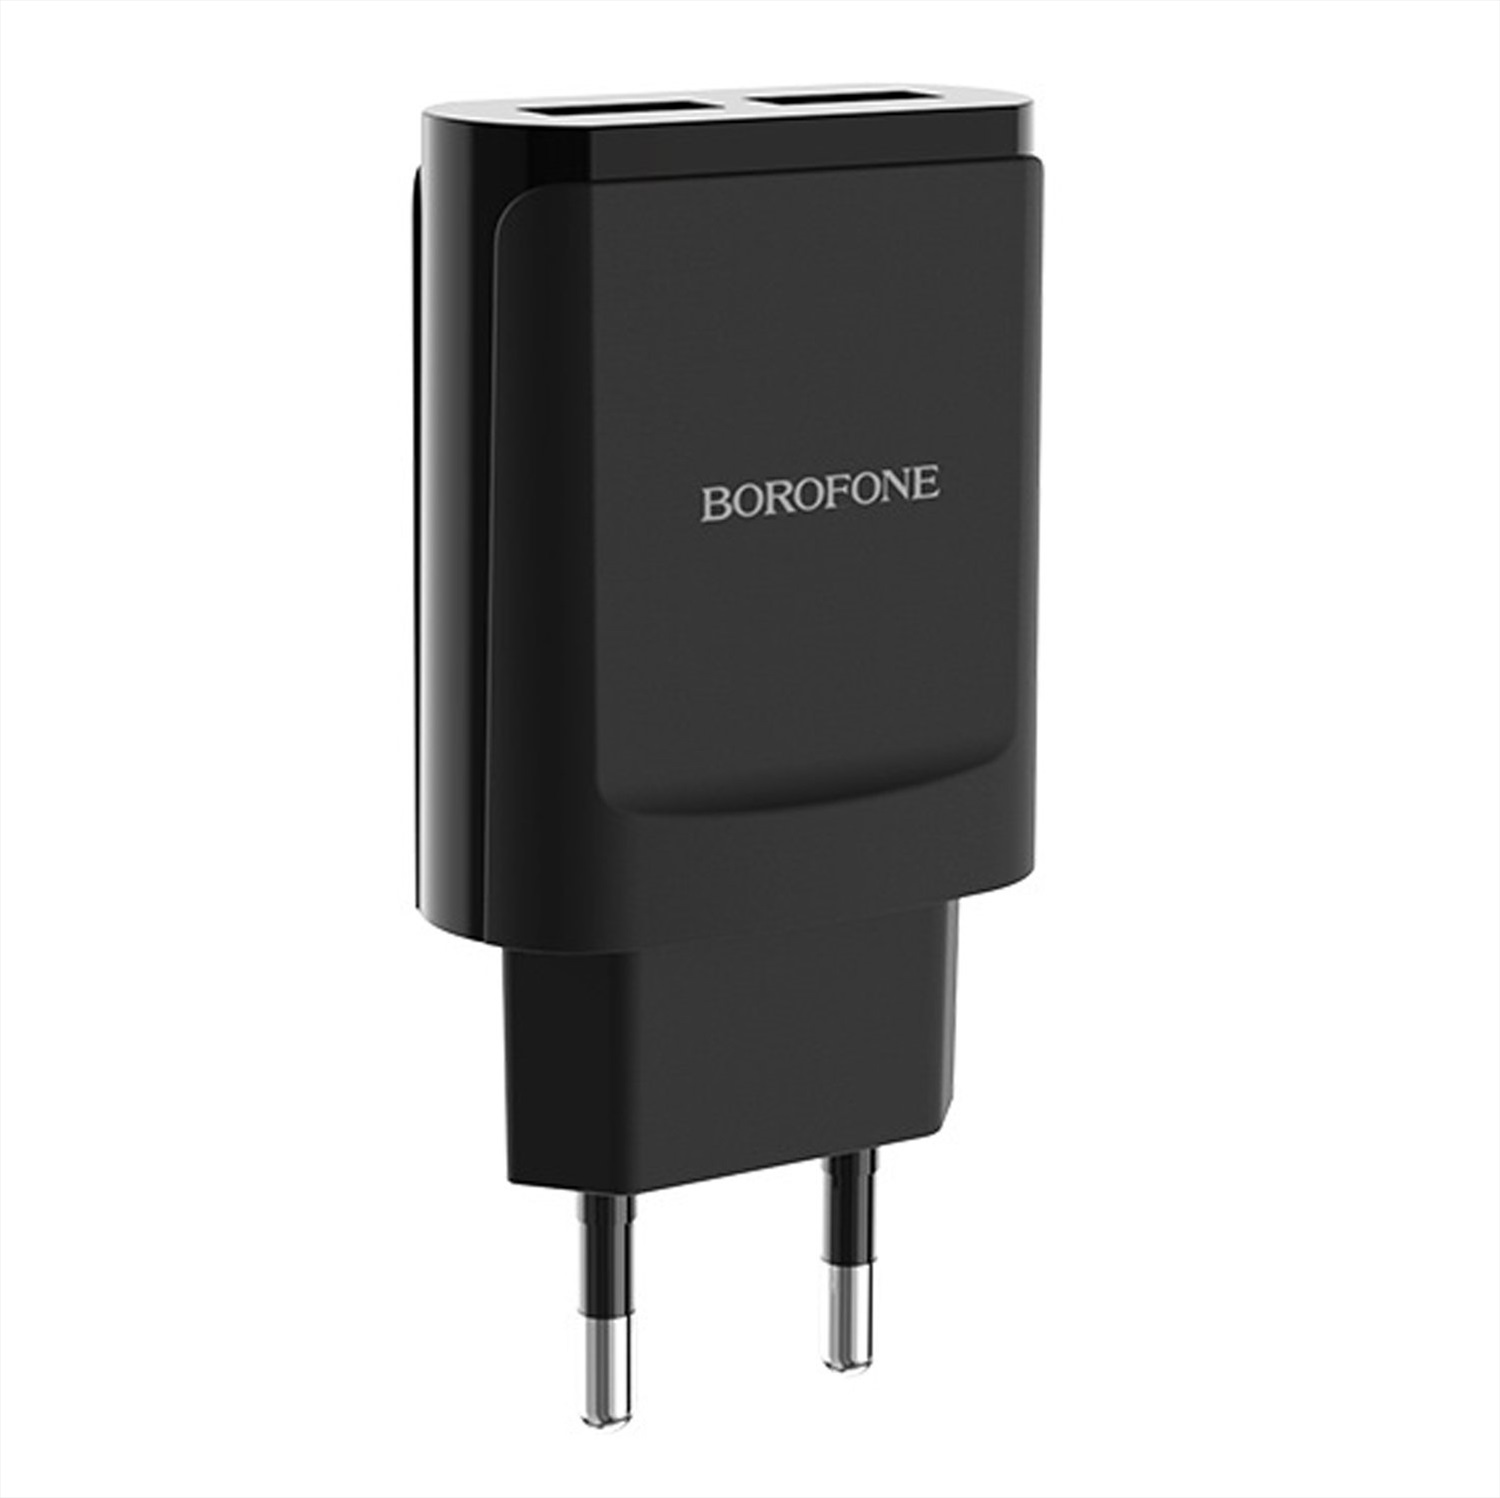 Зарядное устройство borofone. З.У. Borofone сетевое ba20a 1xusb 2.4a черное. СЗУ Borofone ba20a Sharp 2.1a 1usb + кабель Type-c Black. СЗУ Borofone ba20a Sharp, 1 USB, Micro-USB, 2.1A черный. Borofone ba20a USB 2.1A Black.